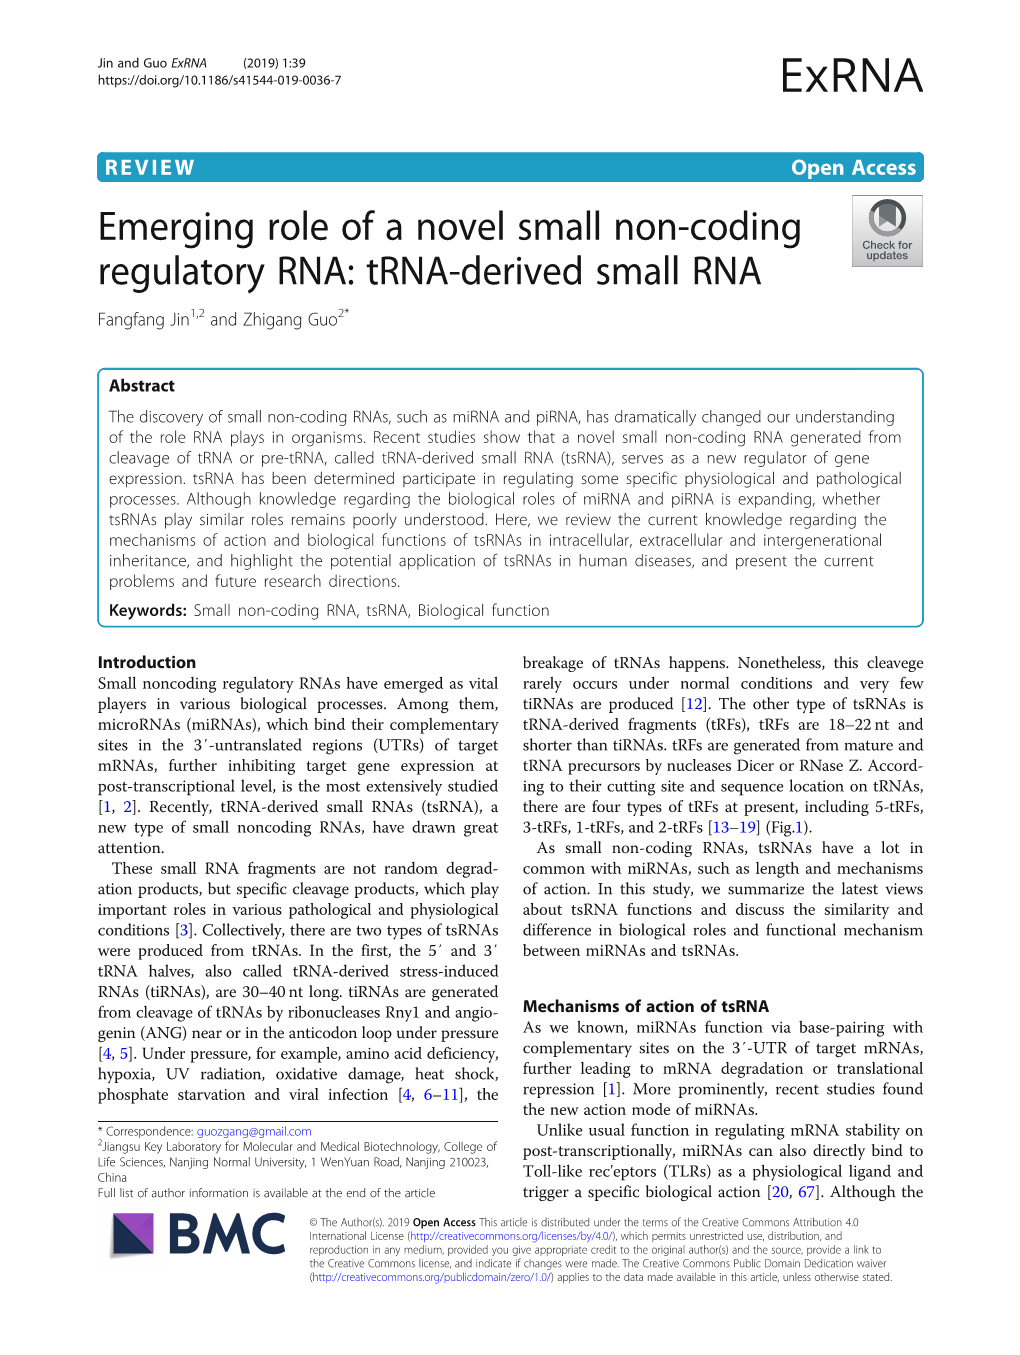 Emerging Role of a Novel Small Non-Coding Regulatory RNA: Trna-Derived Small RNA Fangfang Jin1,2 and Zhigang Guo2*